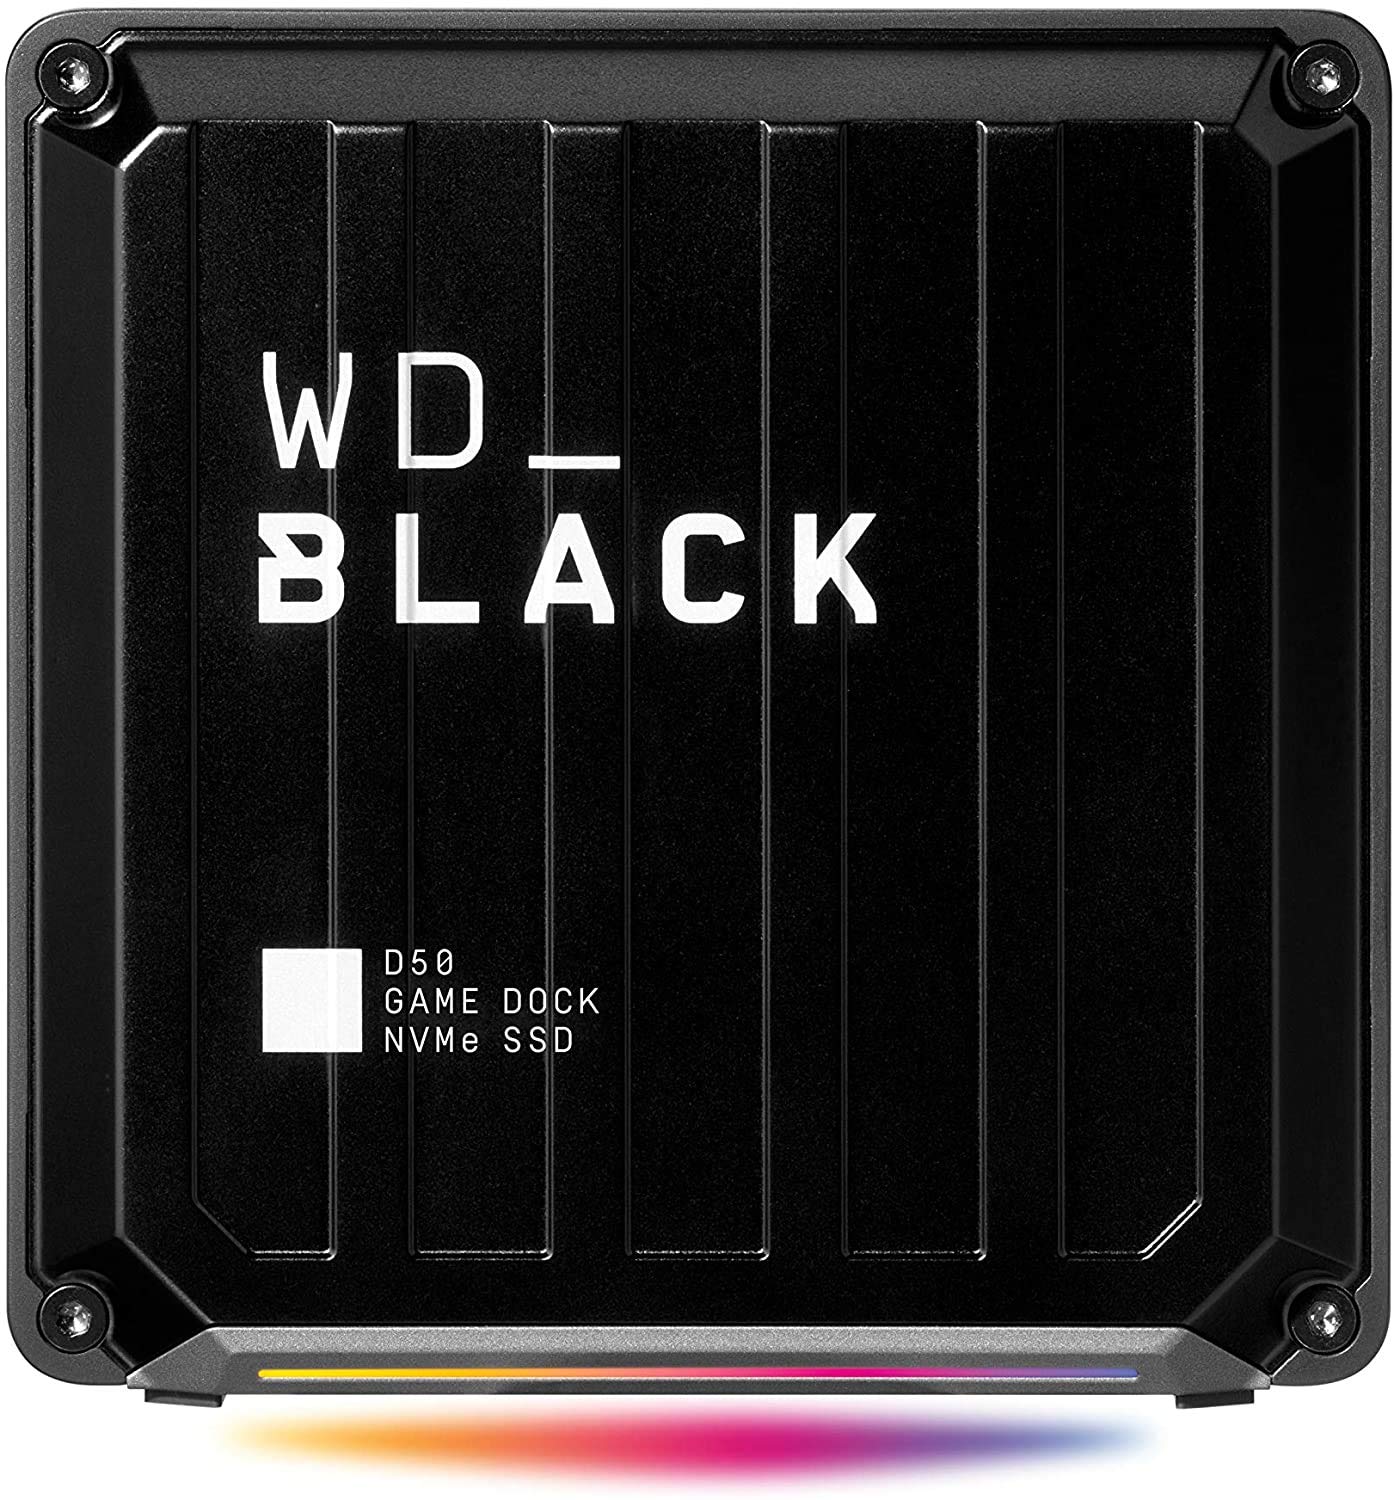 WD BLACK D50 GAME DOCK SSD 2TB